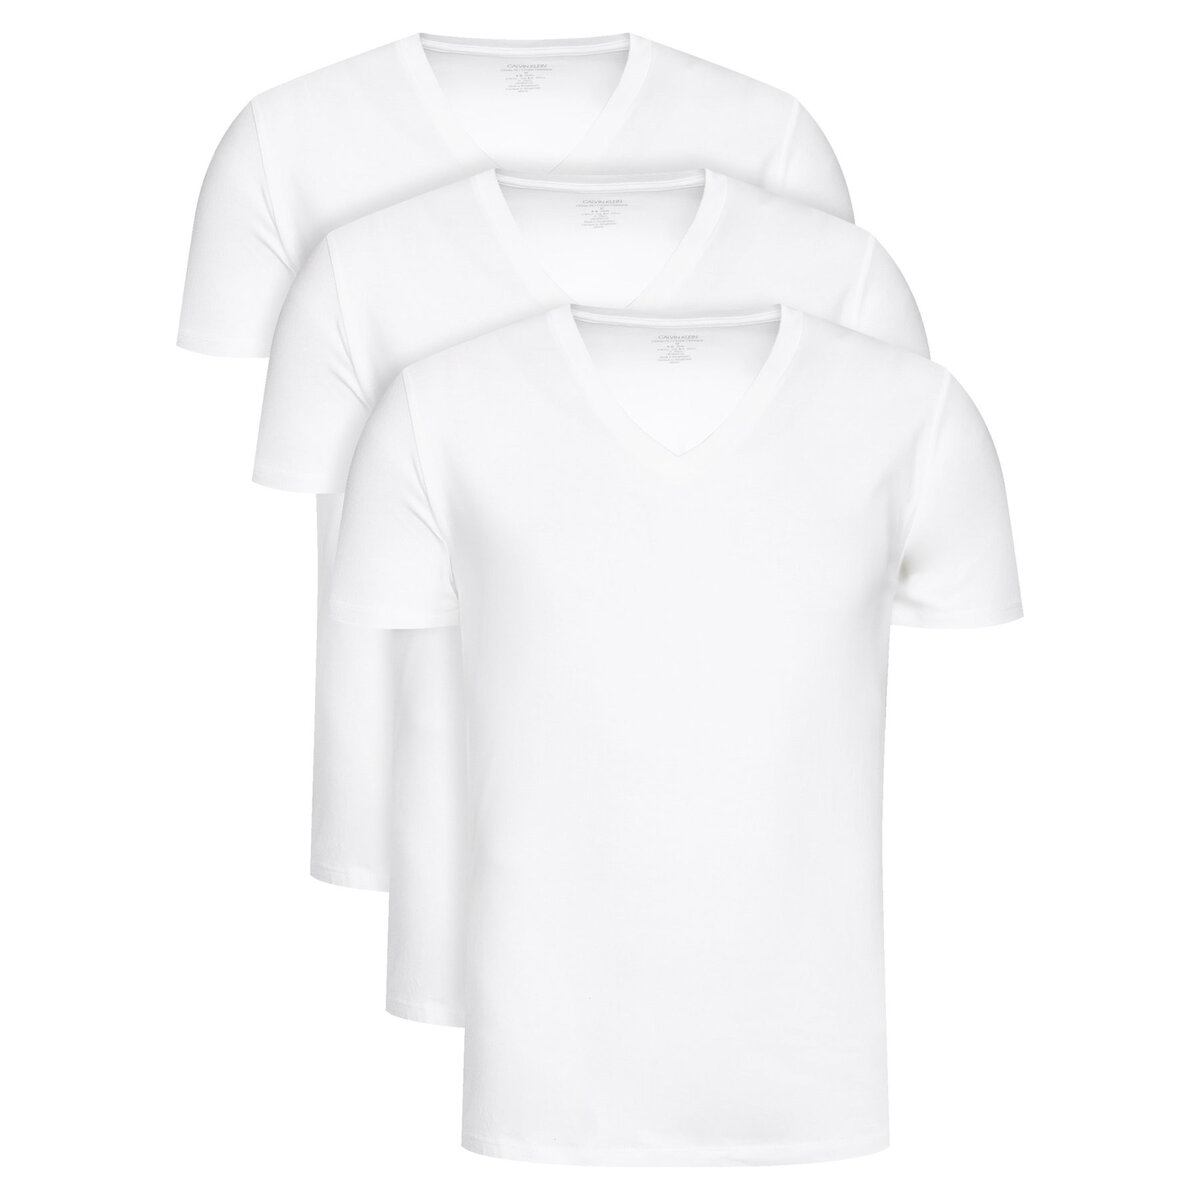 Pánské tričko RBH865 Y7B10A 3pk bílá - Calvin Klein, bílá/potisk L i10_P45627_1:961_2:90_